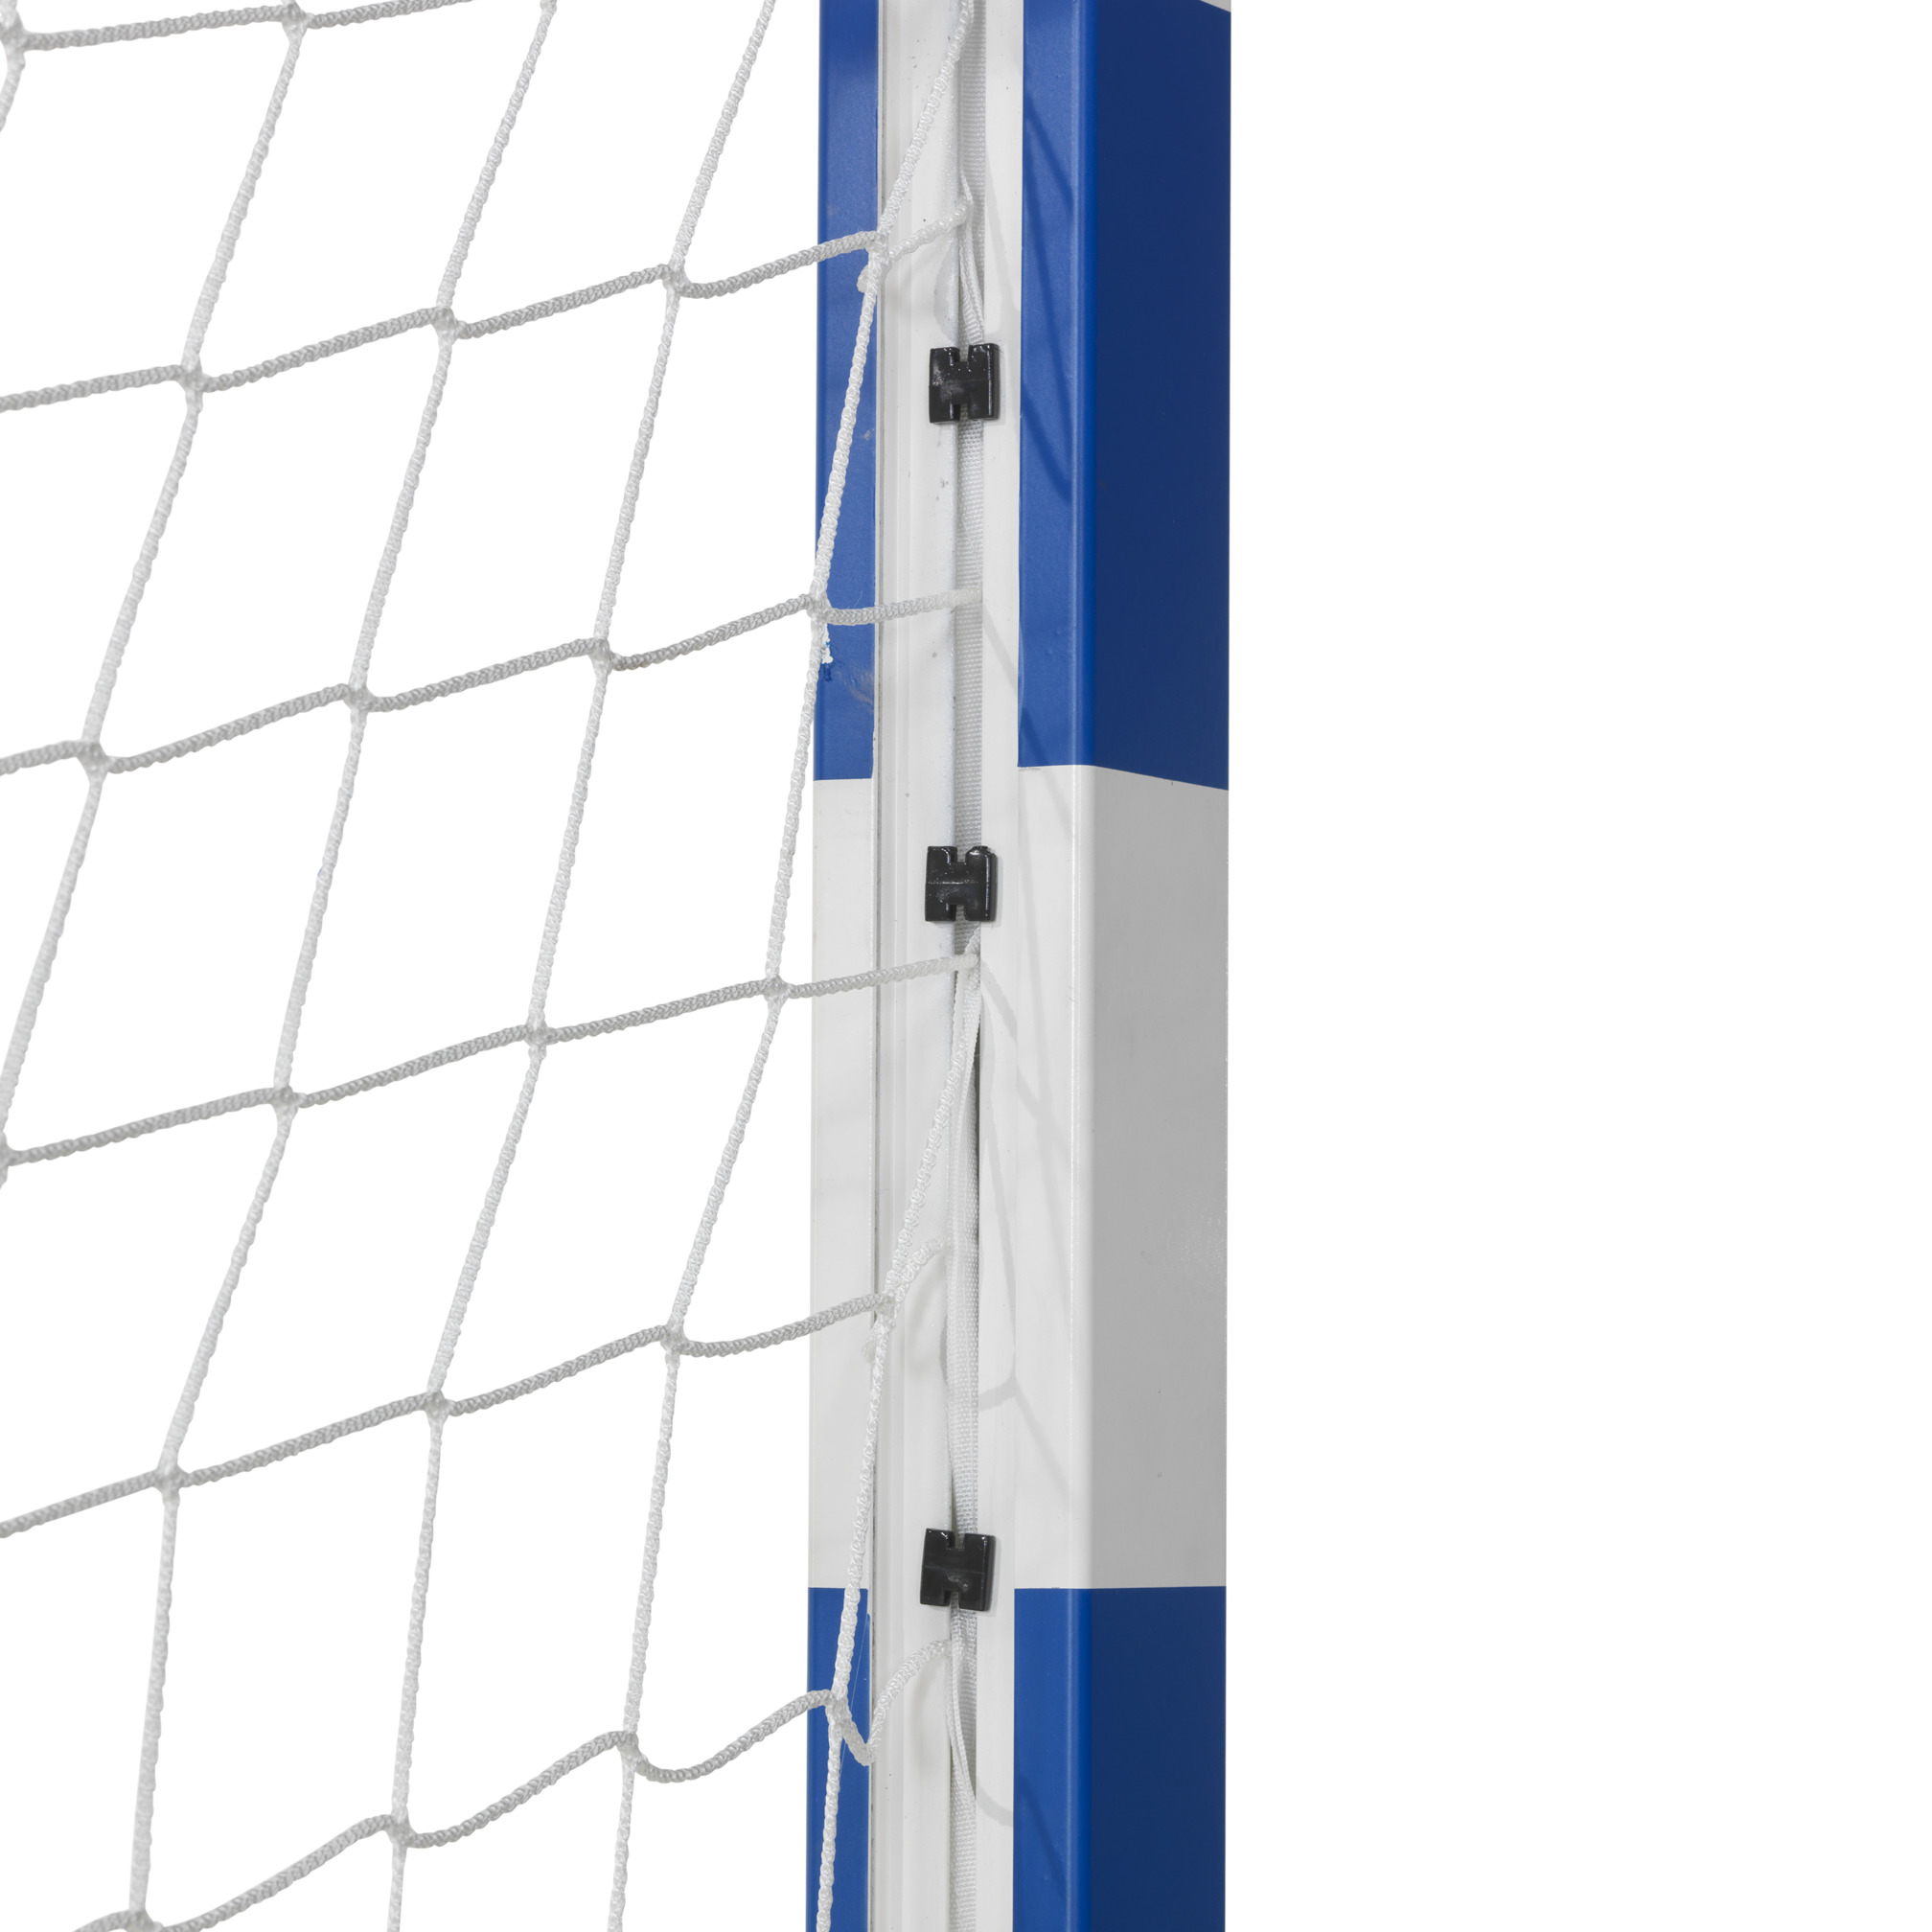 IHF Handball goal with collapsible bracket